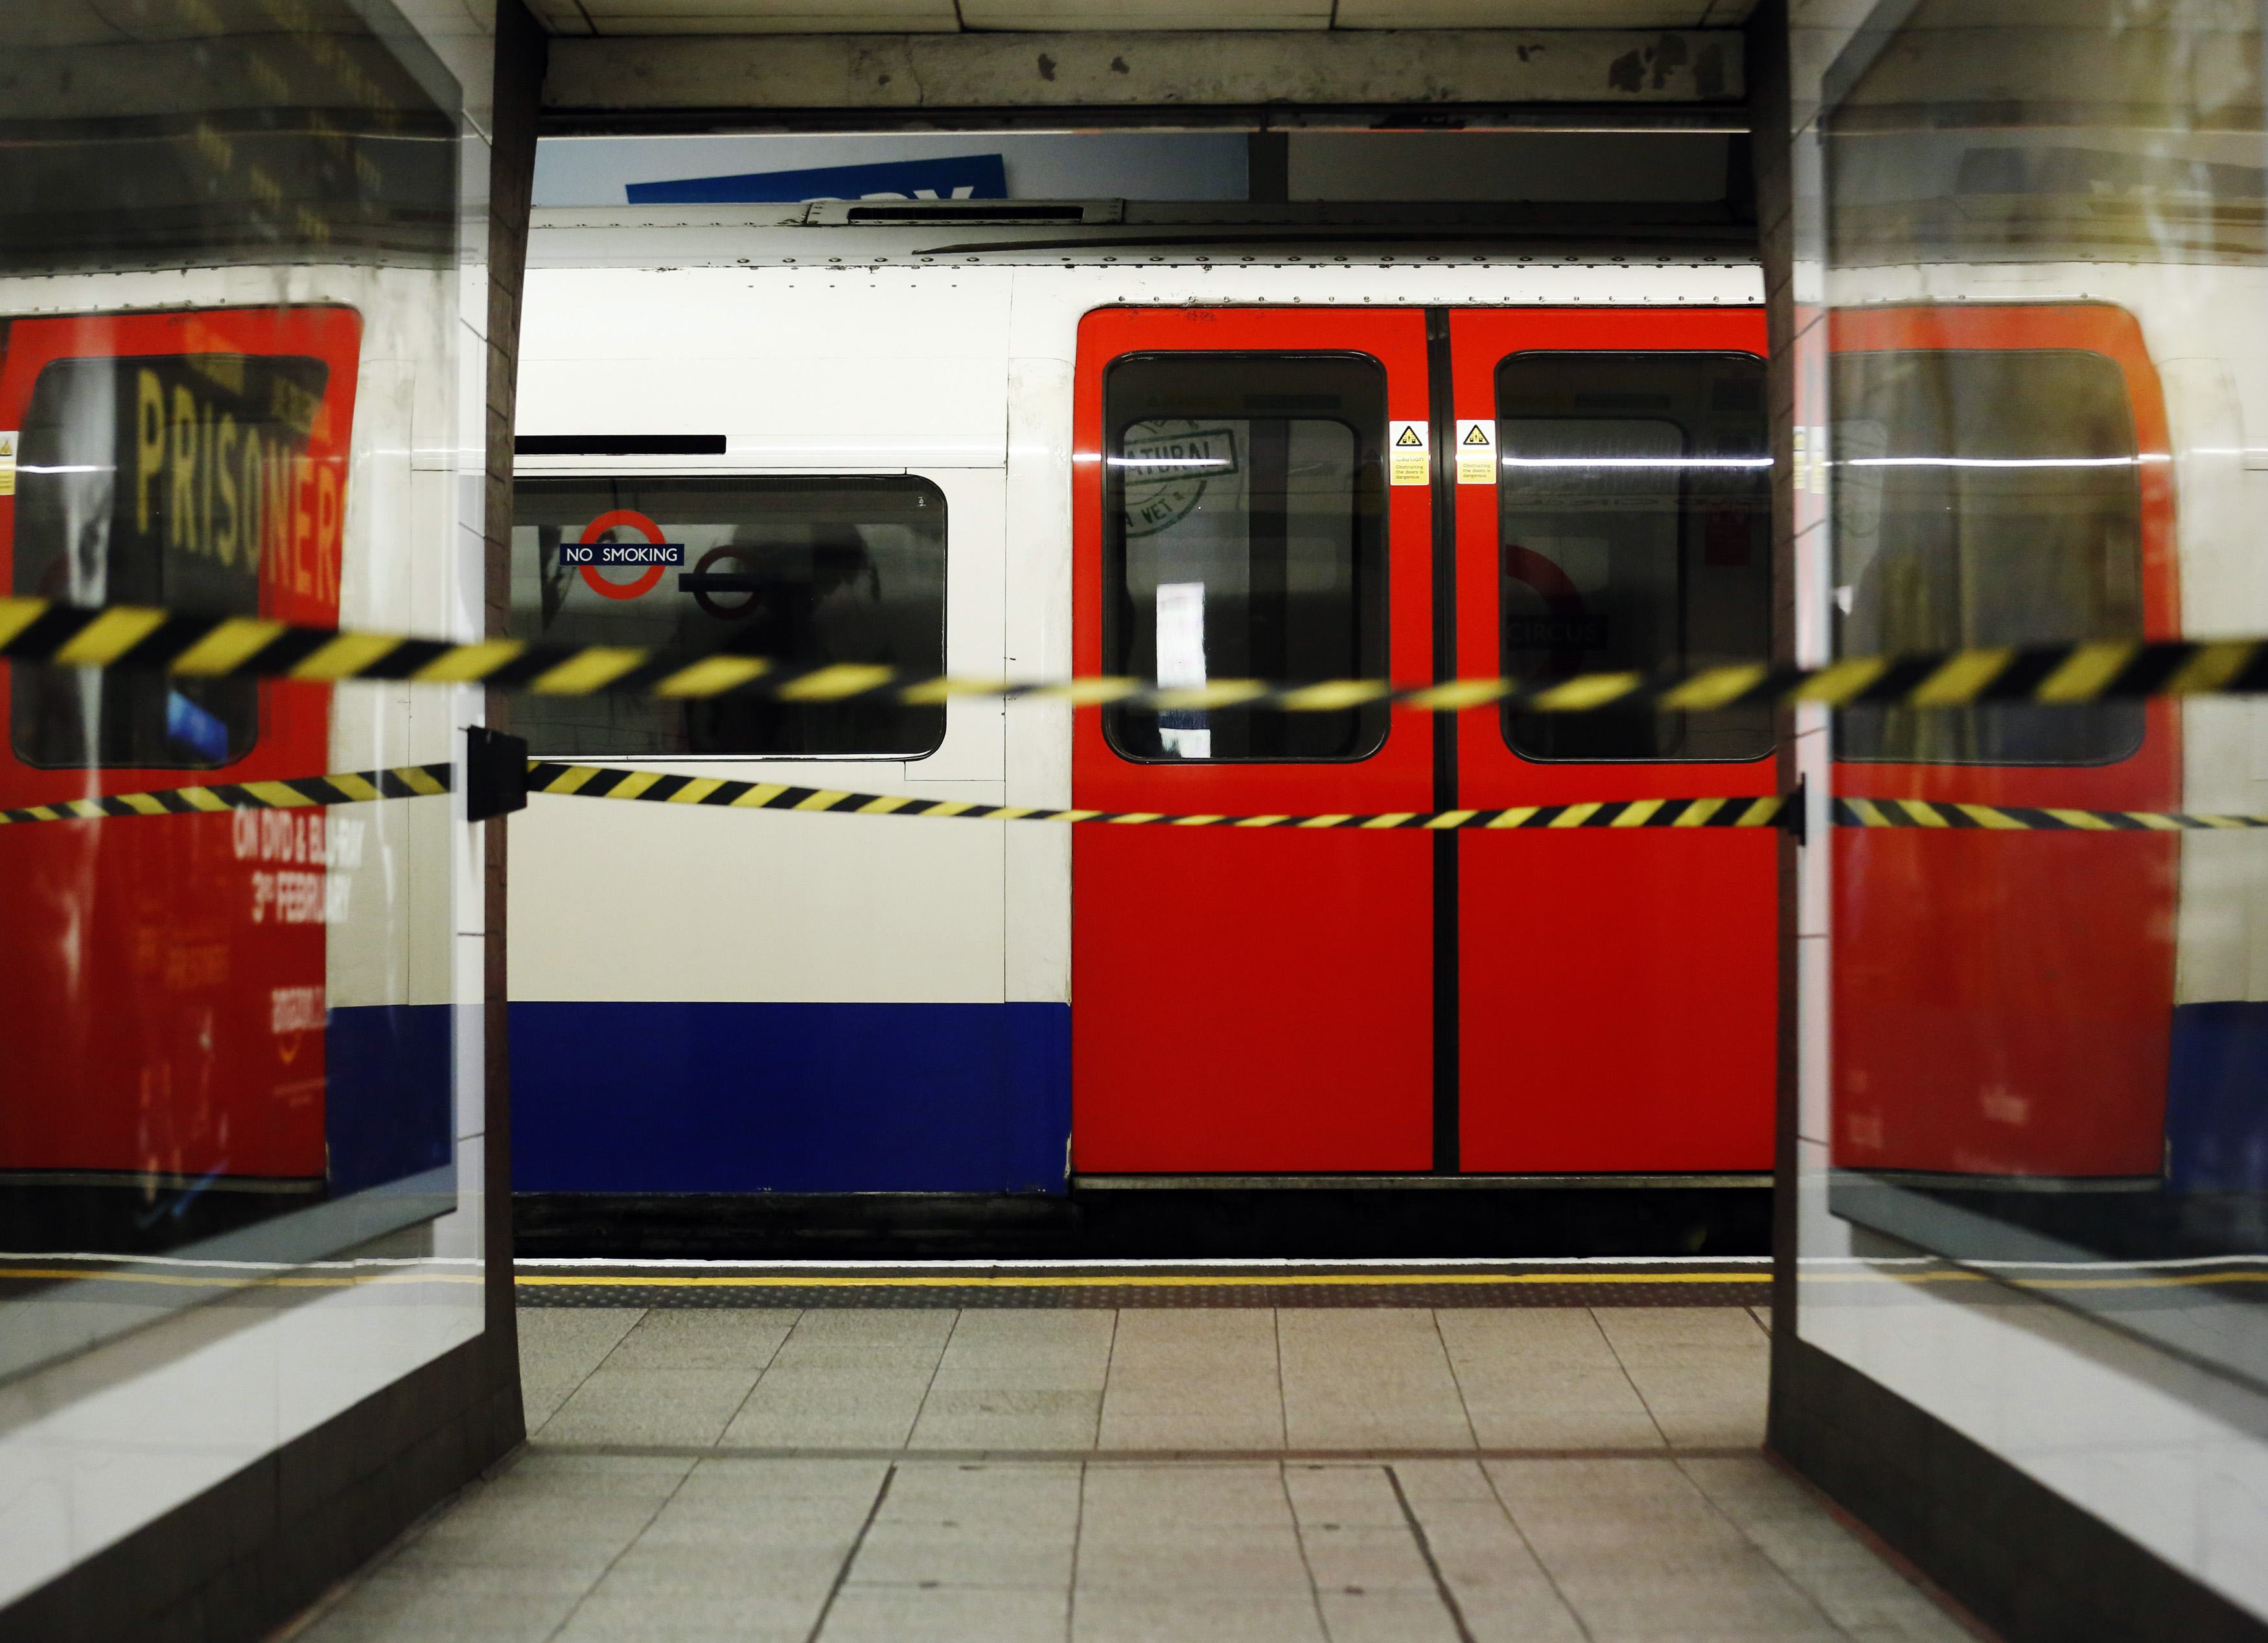 Huelga en el metro en Londres afecta a millones de usuarios (Fotos)